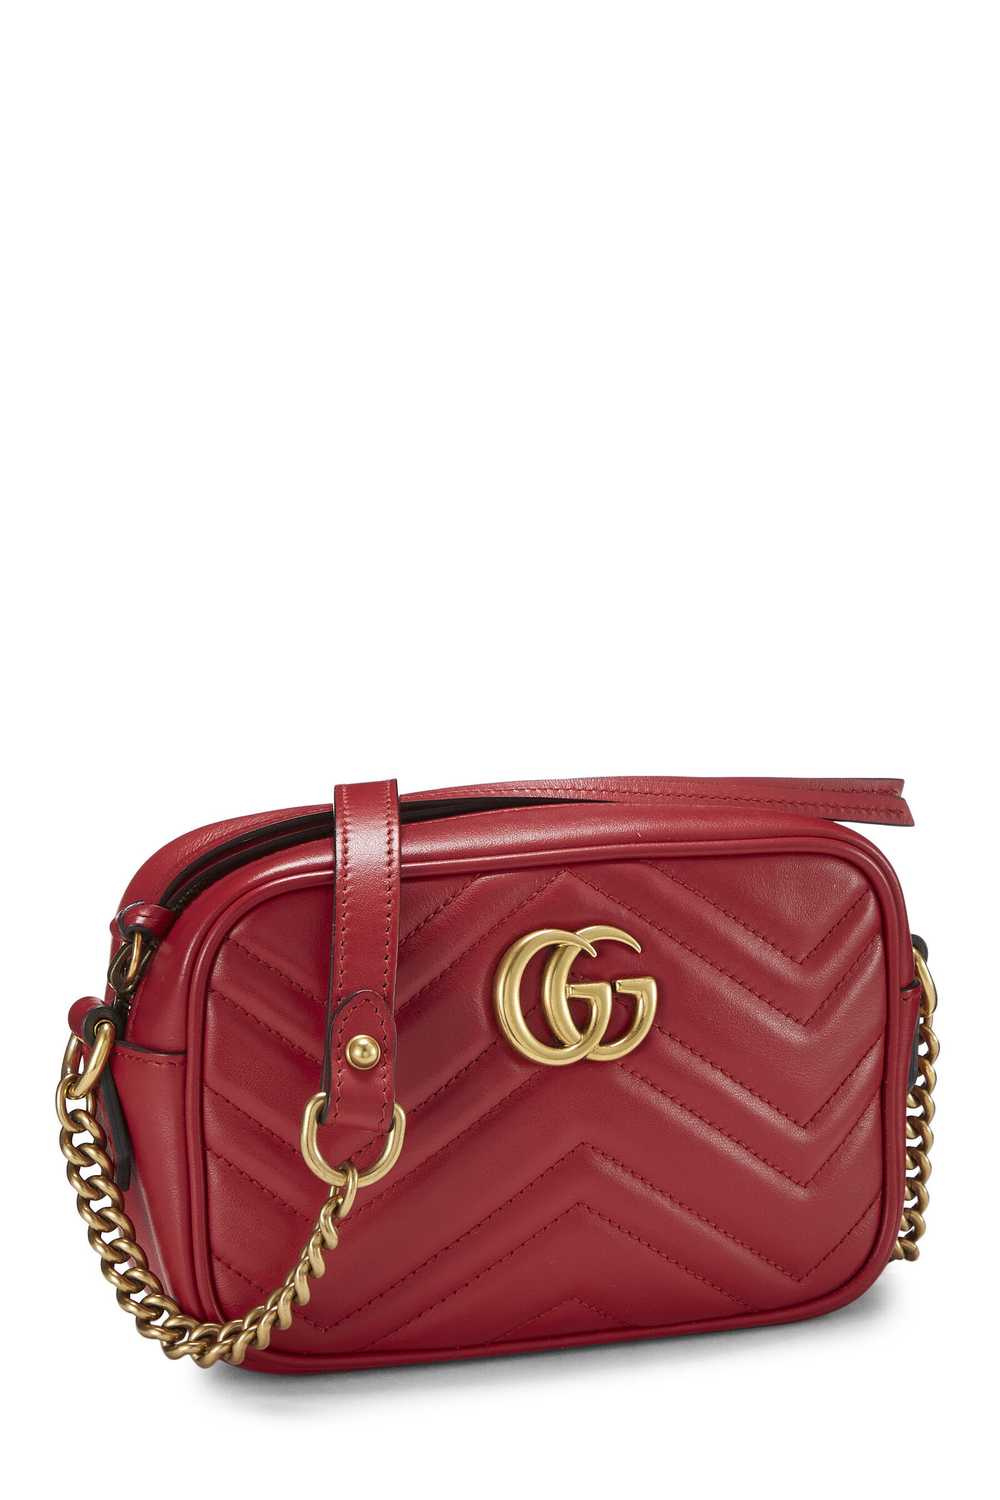 Red Leather GG Marmont Shoulder Bag Mini - image 2